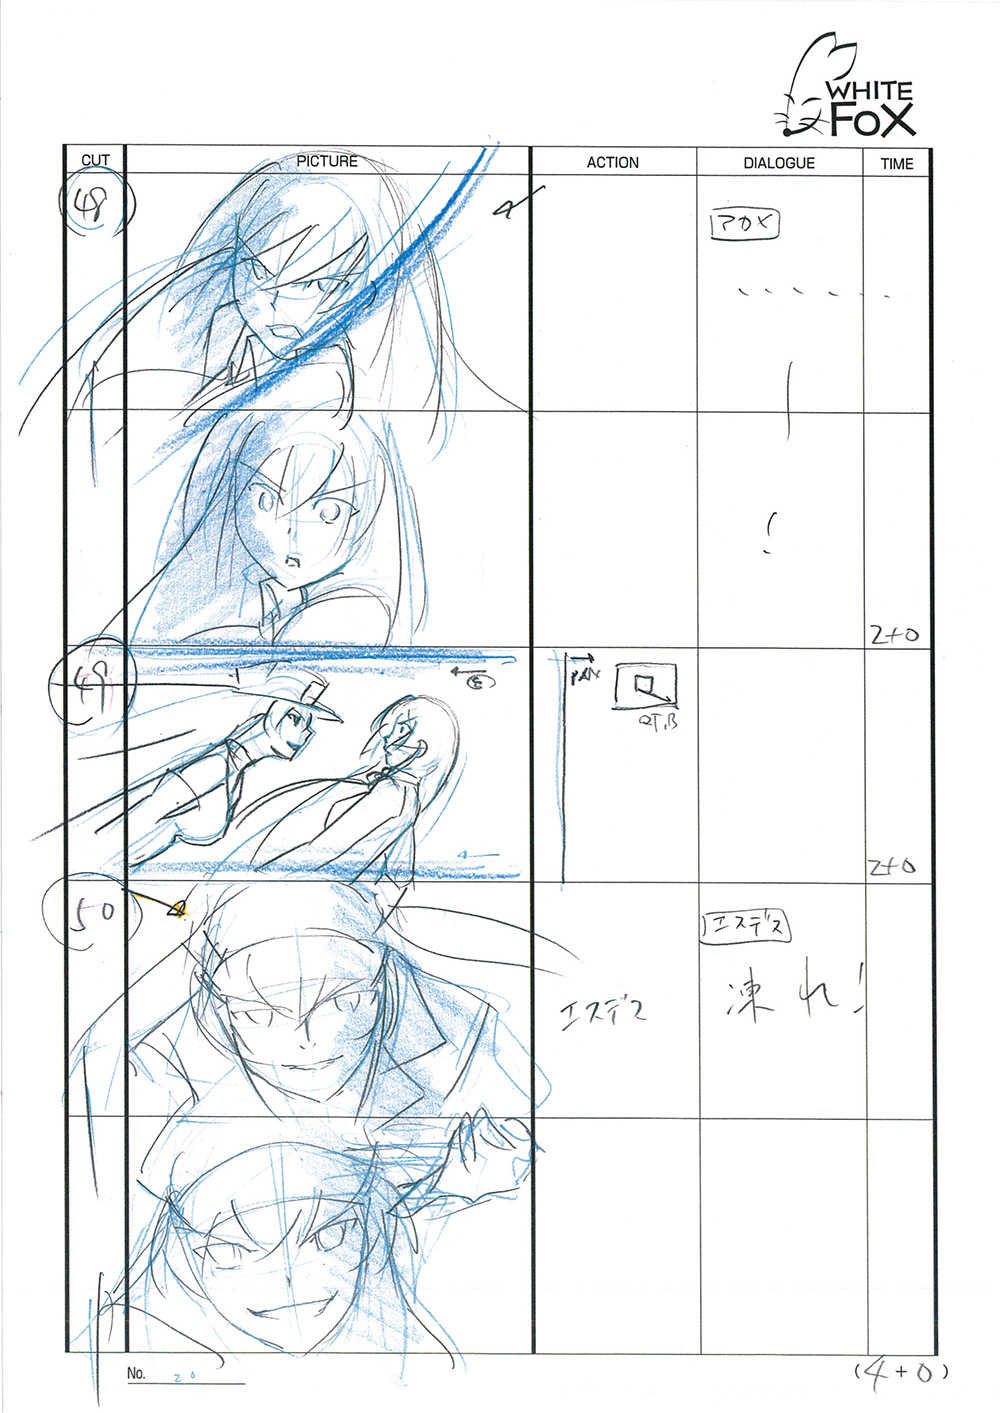 Akame ga Kill Episode 24 Storyboard Leak 022